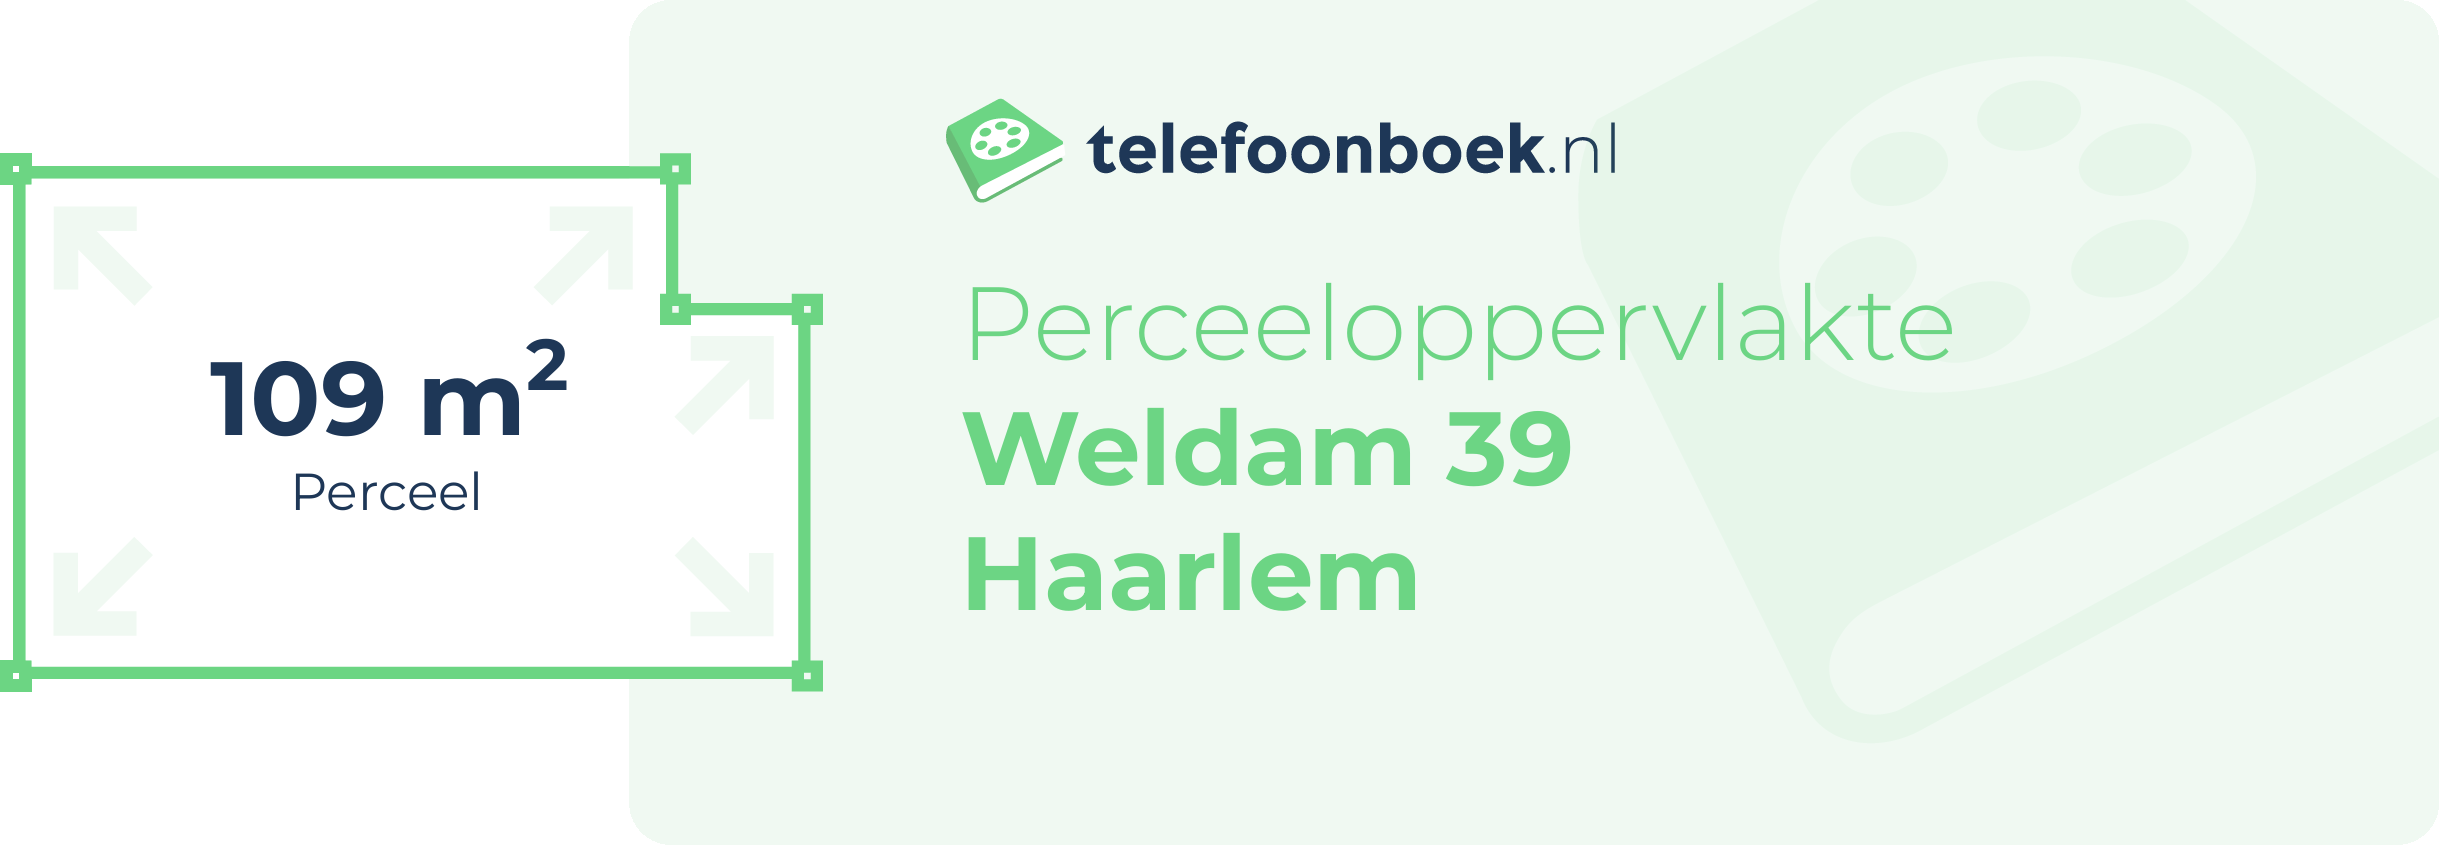 Perceeloppervlakte Weldam 39 Haarlem